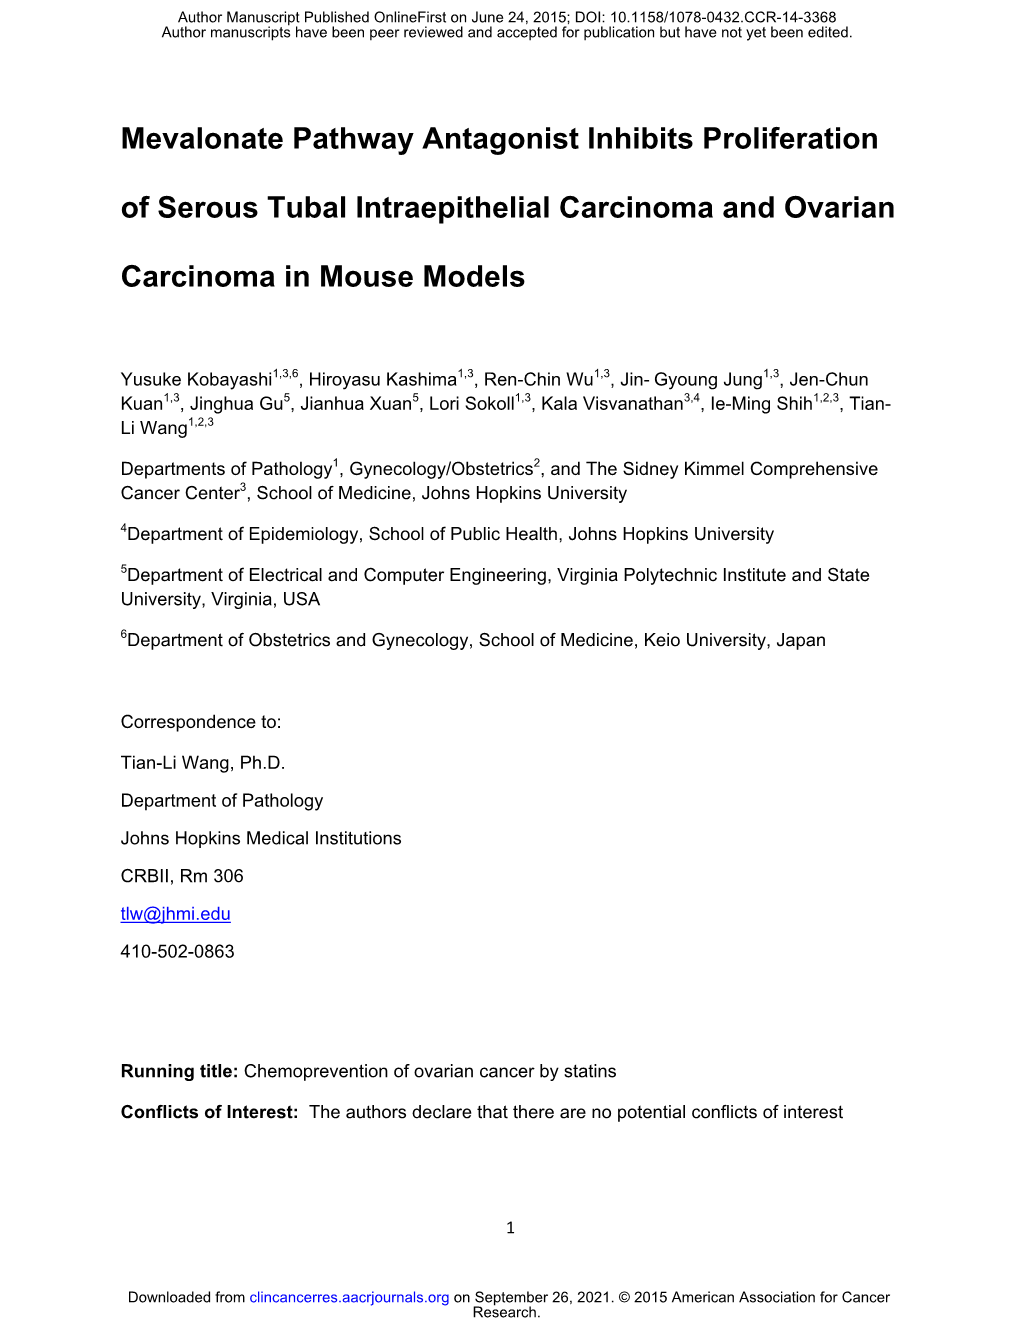 Mevalonate Pathway Antagonist Inhibits Proliferation of Serous Tubal Intraepithelial Carcinoma and Ovarian